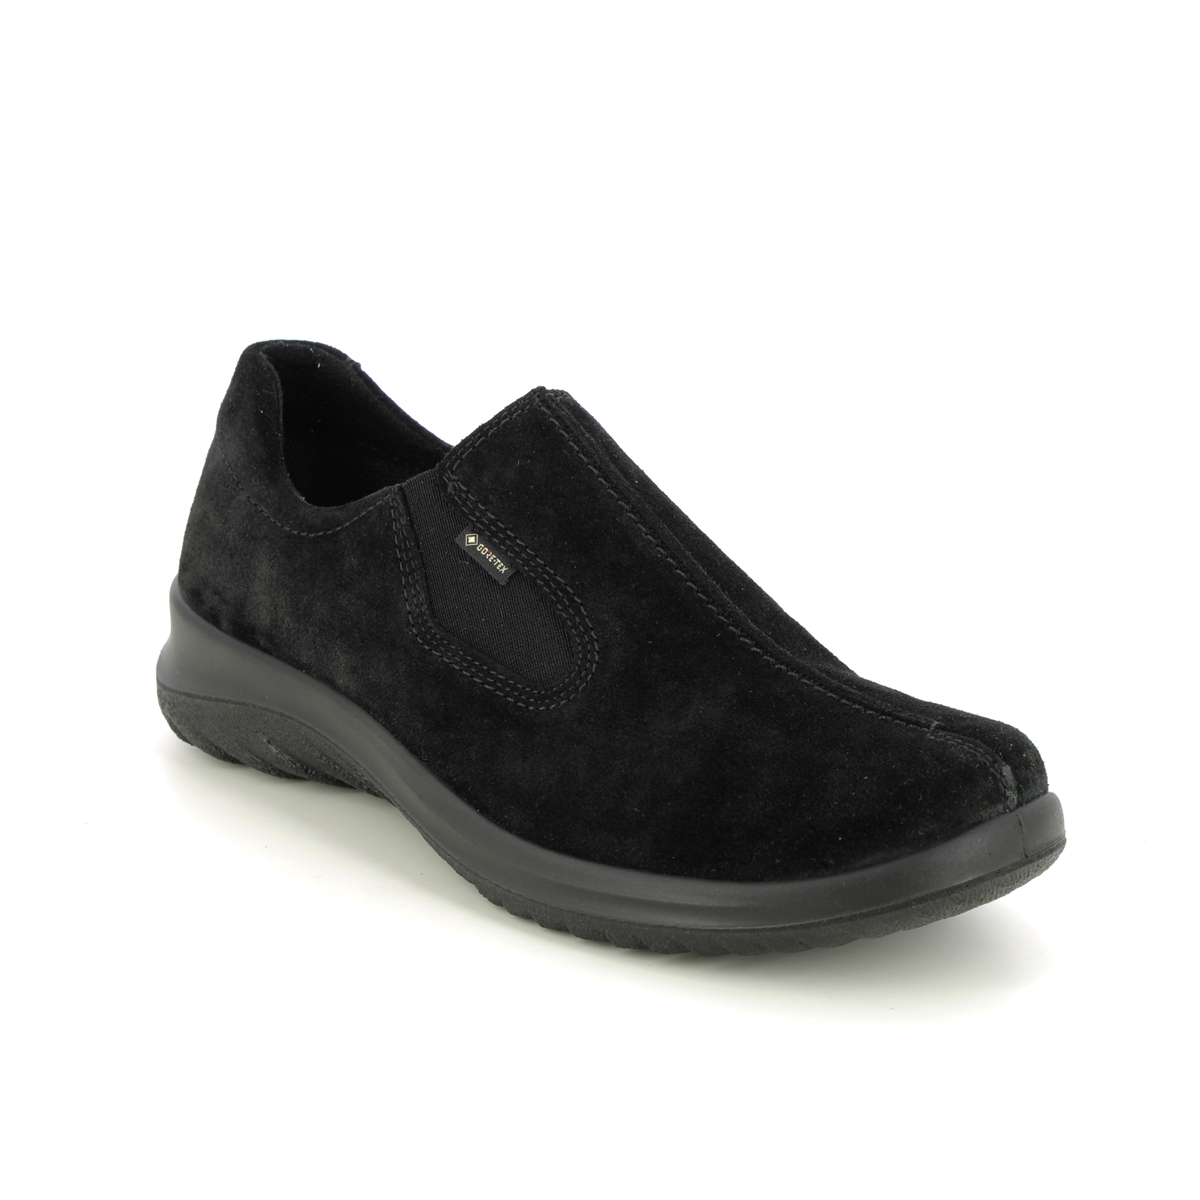 Legero Soft Shoe Gtx Black Suede Womens Comfort Slip On Shoes 2009568-0000 In Size 3.5 In Plain Black Suede